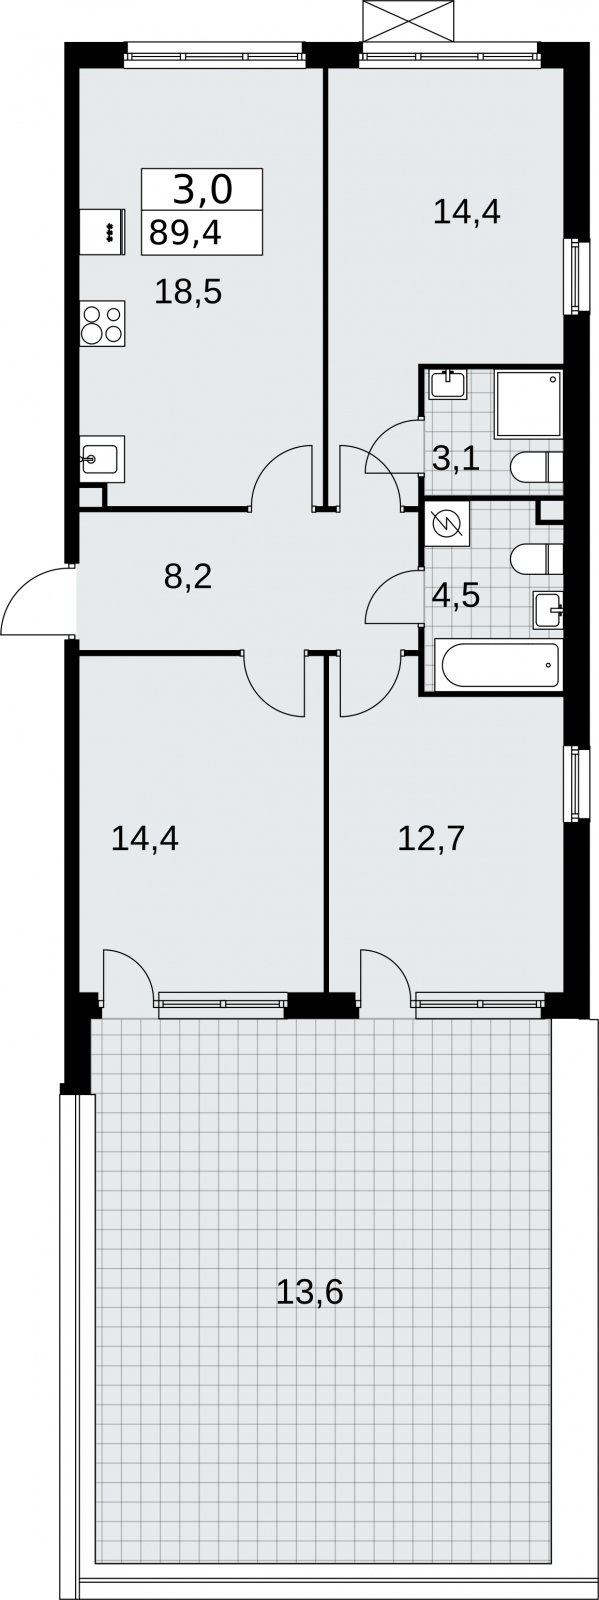 3-комнатная квартира с частичной отделкой, 89.4 м2, 2 этаж, сдача 1 квартал 2026 г., ЖК Скандинавия, корпус 37.1.3 - объявление 2334127 - фото №1